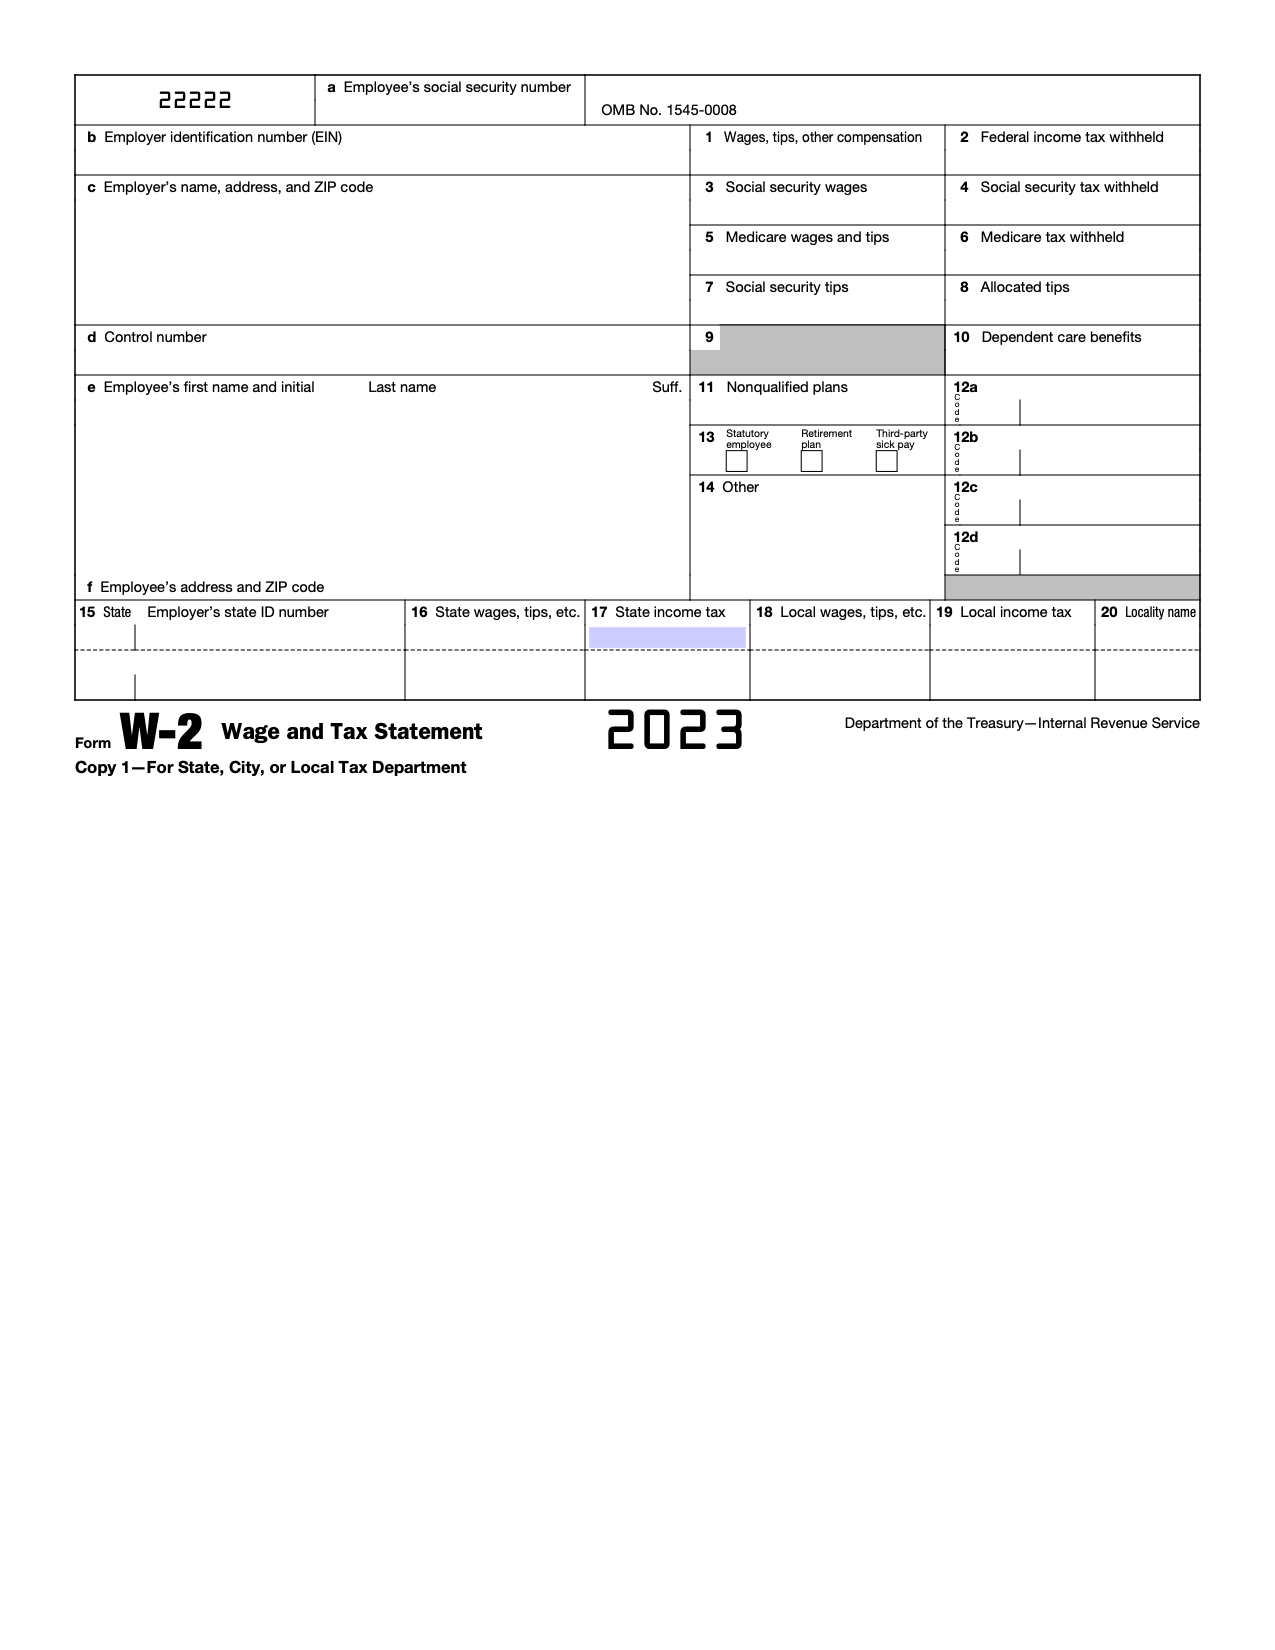 Free Irs Form W-2 | Wage And Tax Statement - Pdf – Eforms regarding W2 Form To Print